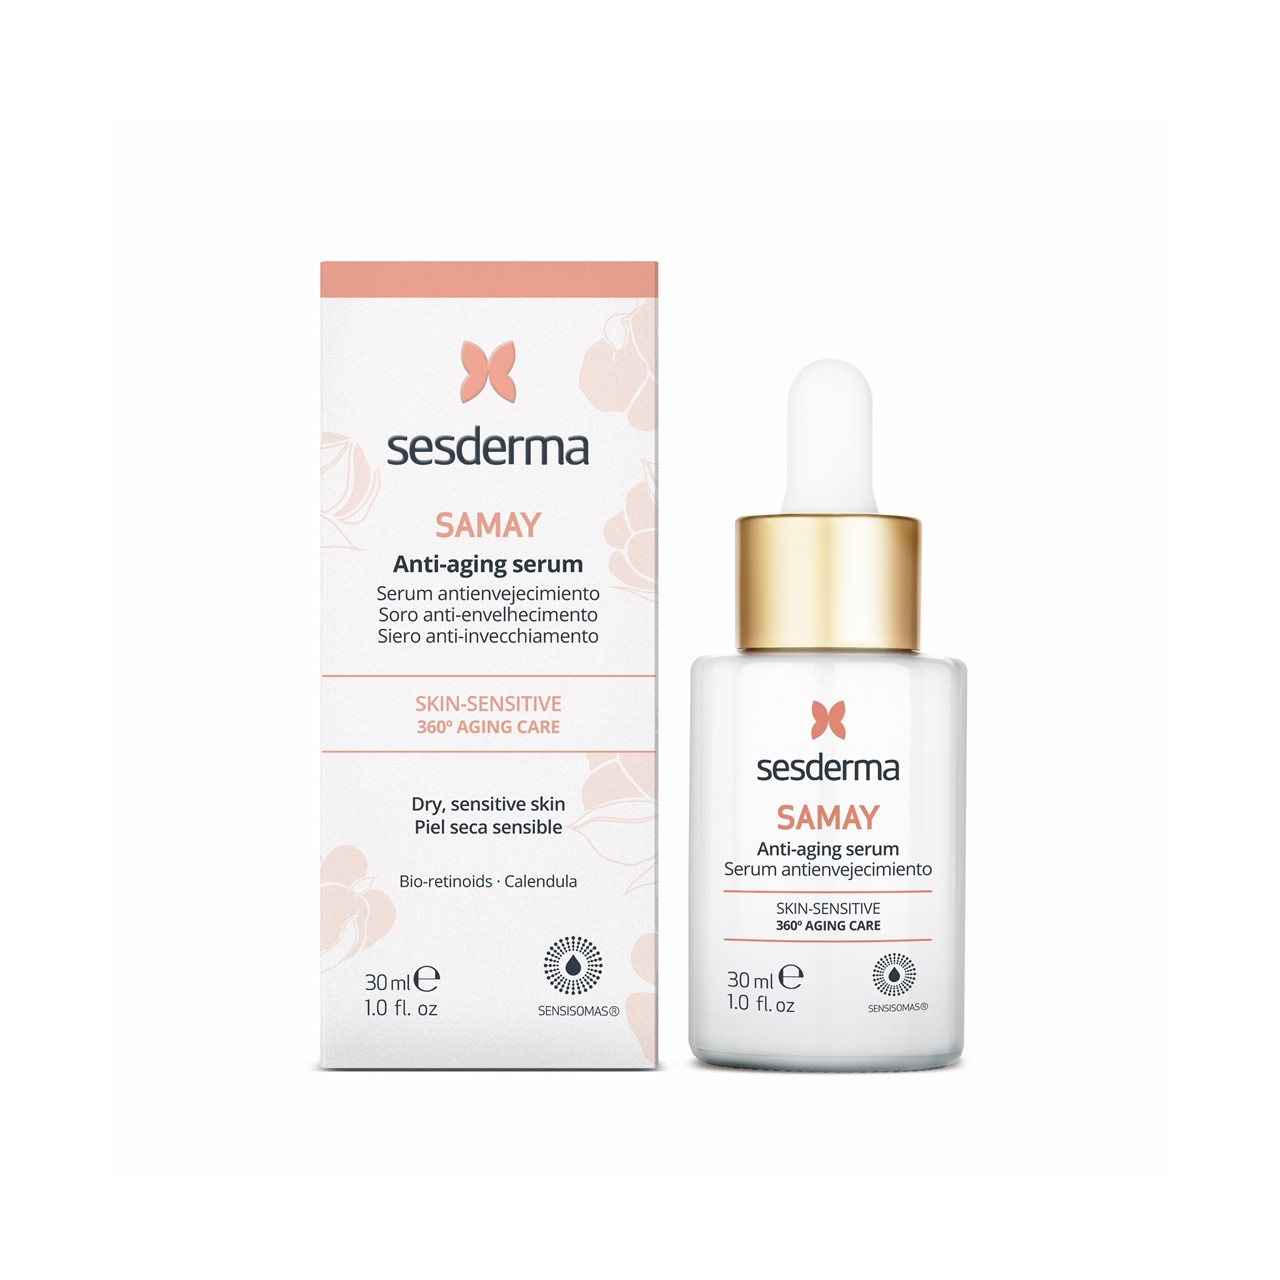 Sesderma Samay Anti-Aging Serum 30ml (1.01fl oz)